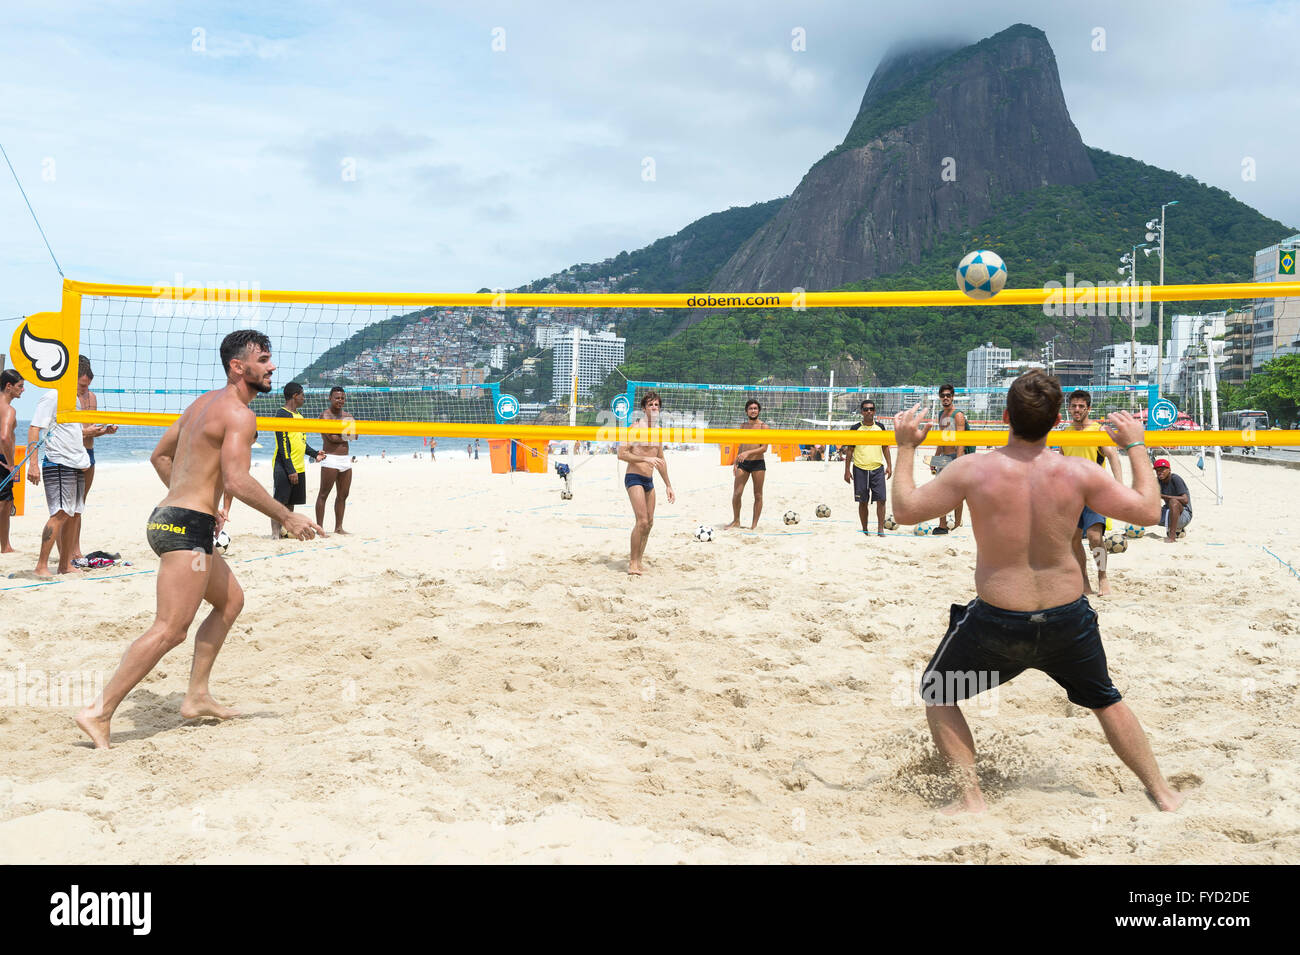 RIO DE JANEIRO - MARCH 17, 2016: Brazilian men play a game of futevôlei (footvolley, a sport combining football and volleyball. Stock Photo